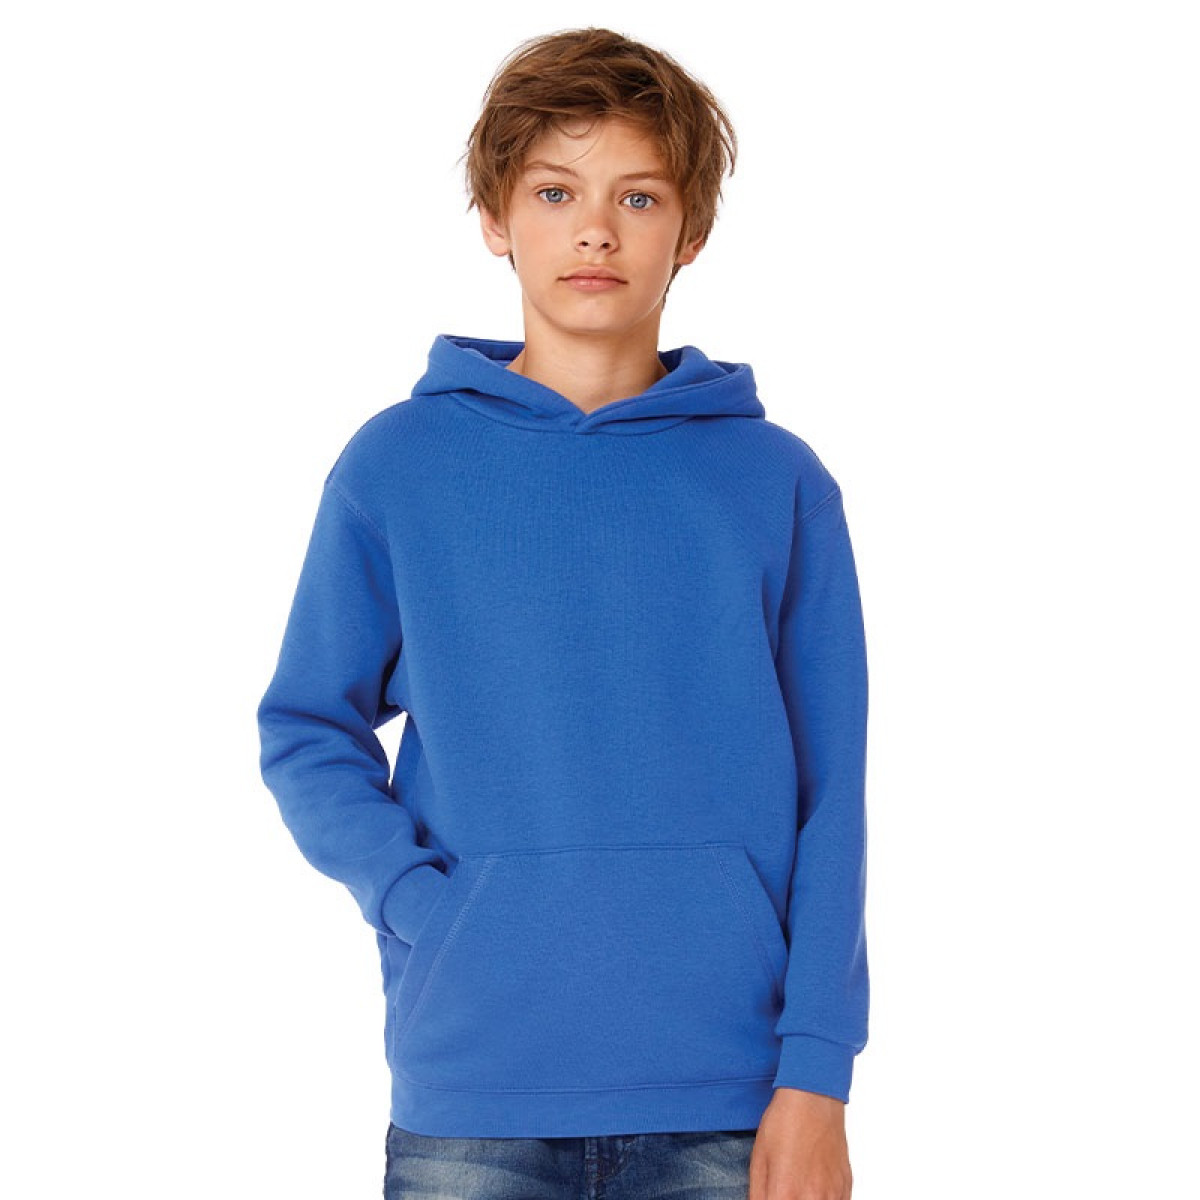 Childrens customised hooded sweatshirt. Warm outdoor wear.